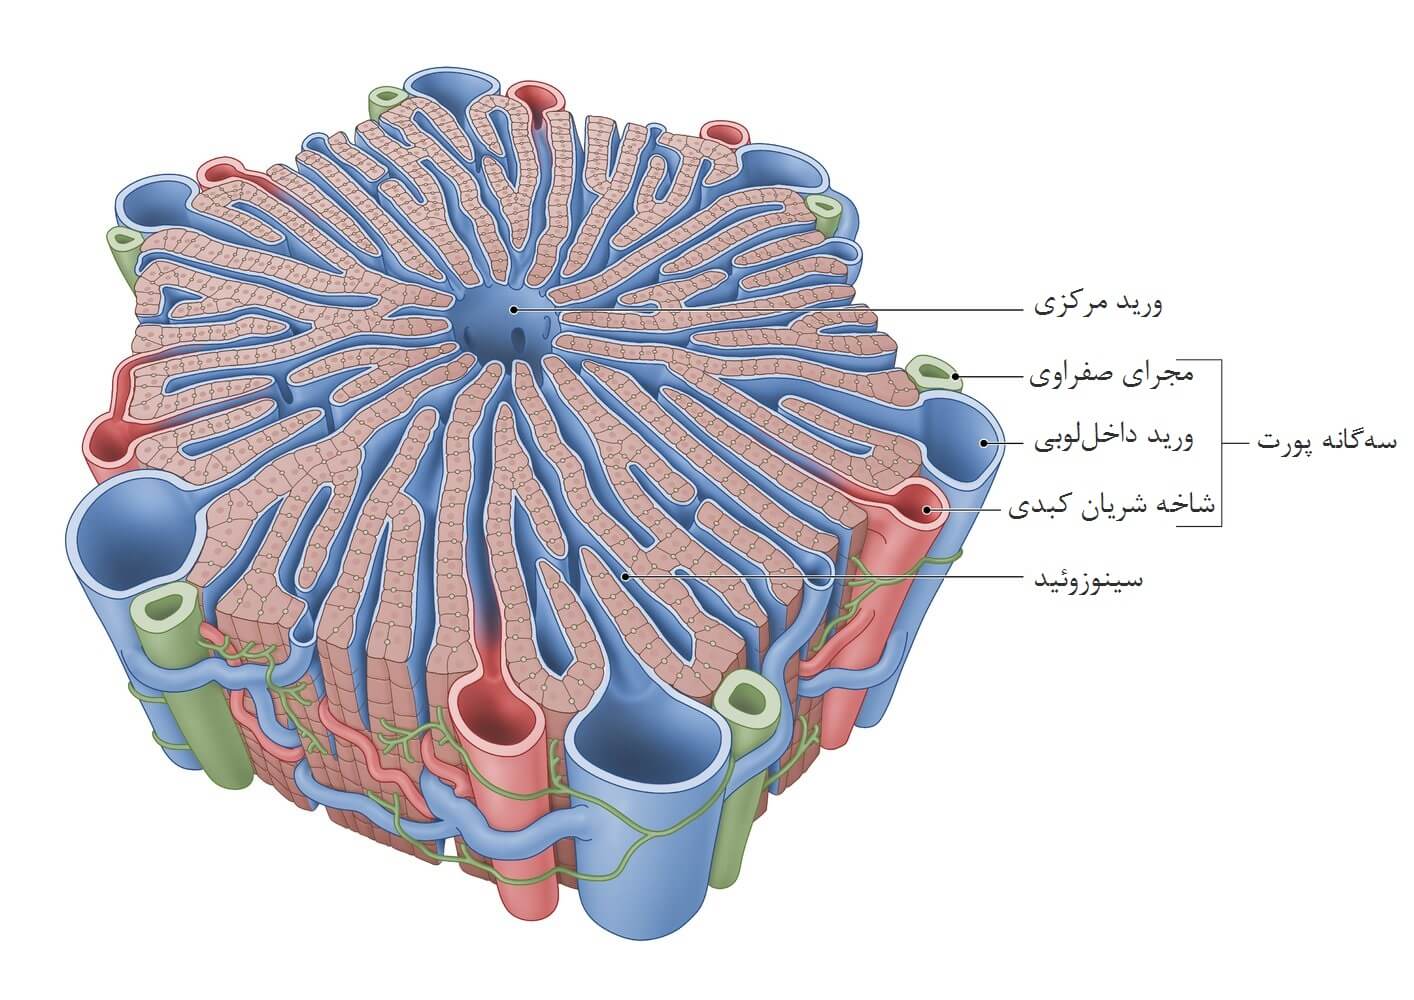 ساختار میکروسکوپی کبد: لوبول کبدی